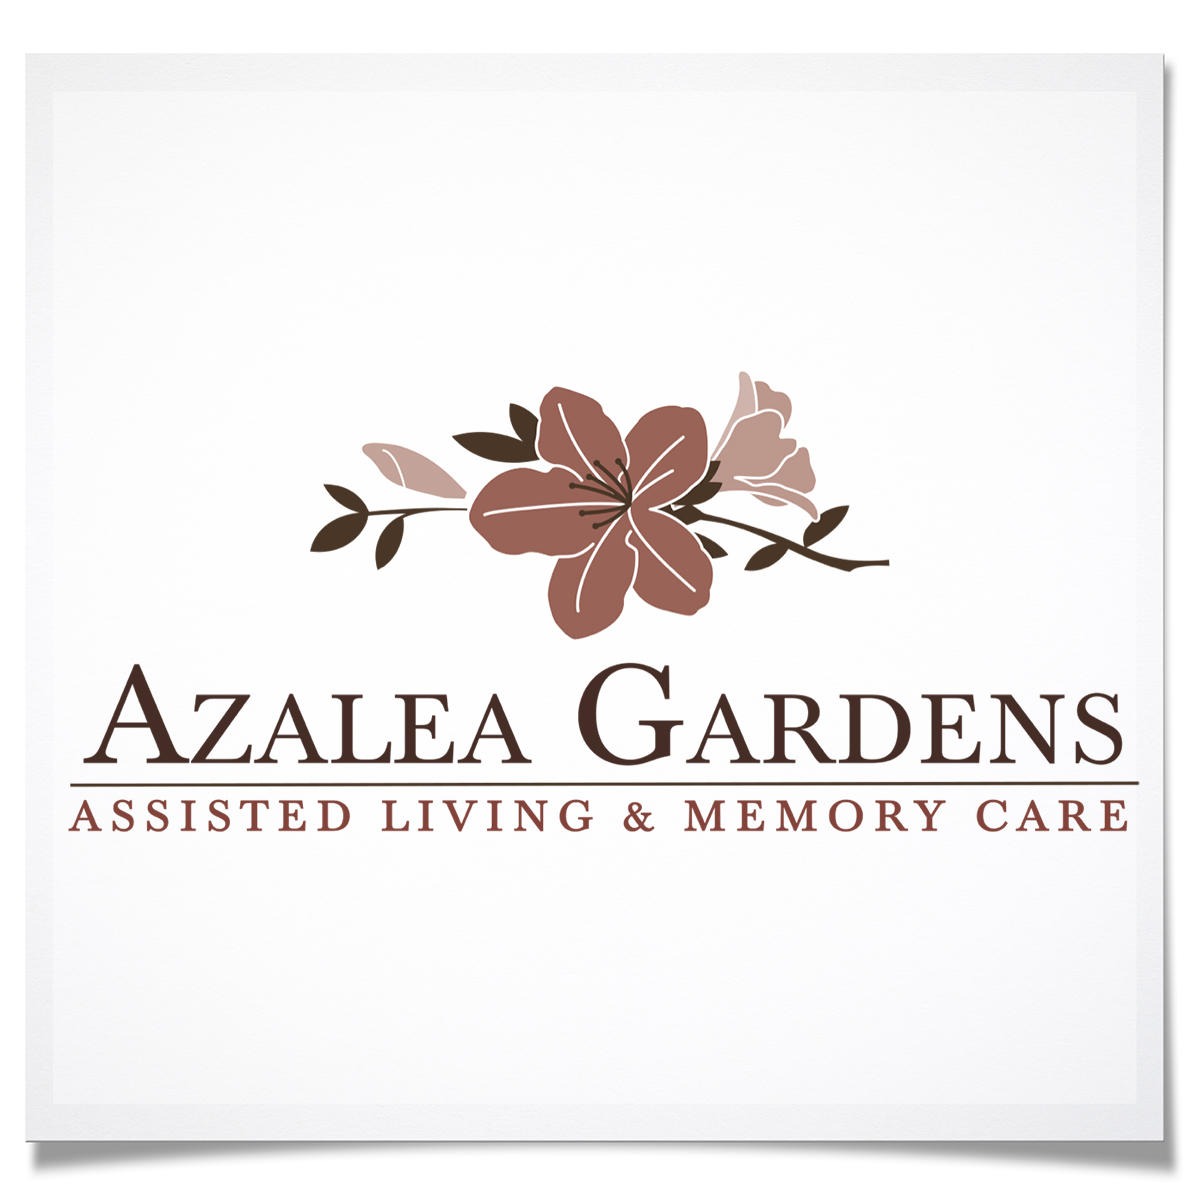 Azalea Gardens Assisted Living & Memory Care - Tallahassee, FL 32312 - (850)695-3371 | ShowMeLocal.com